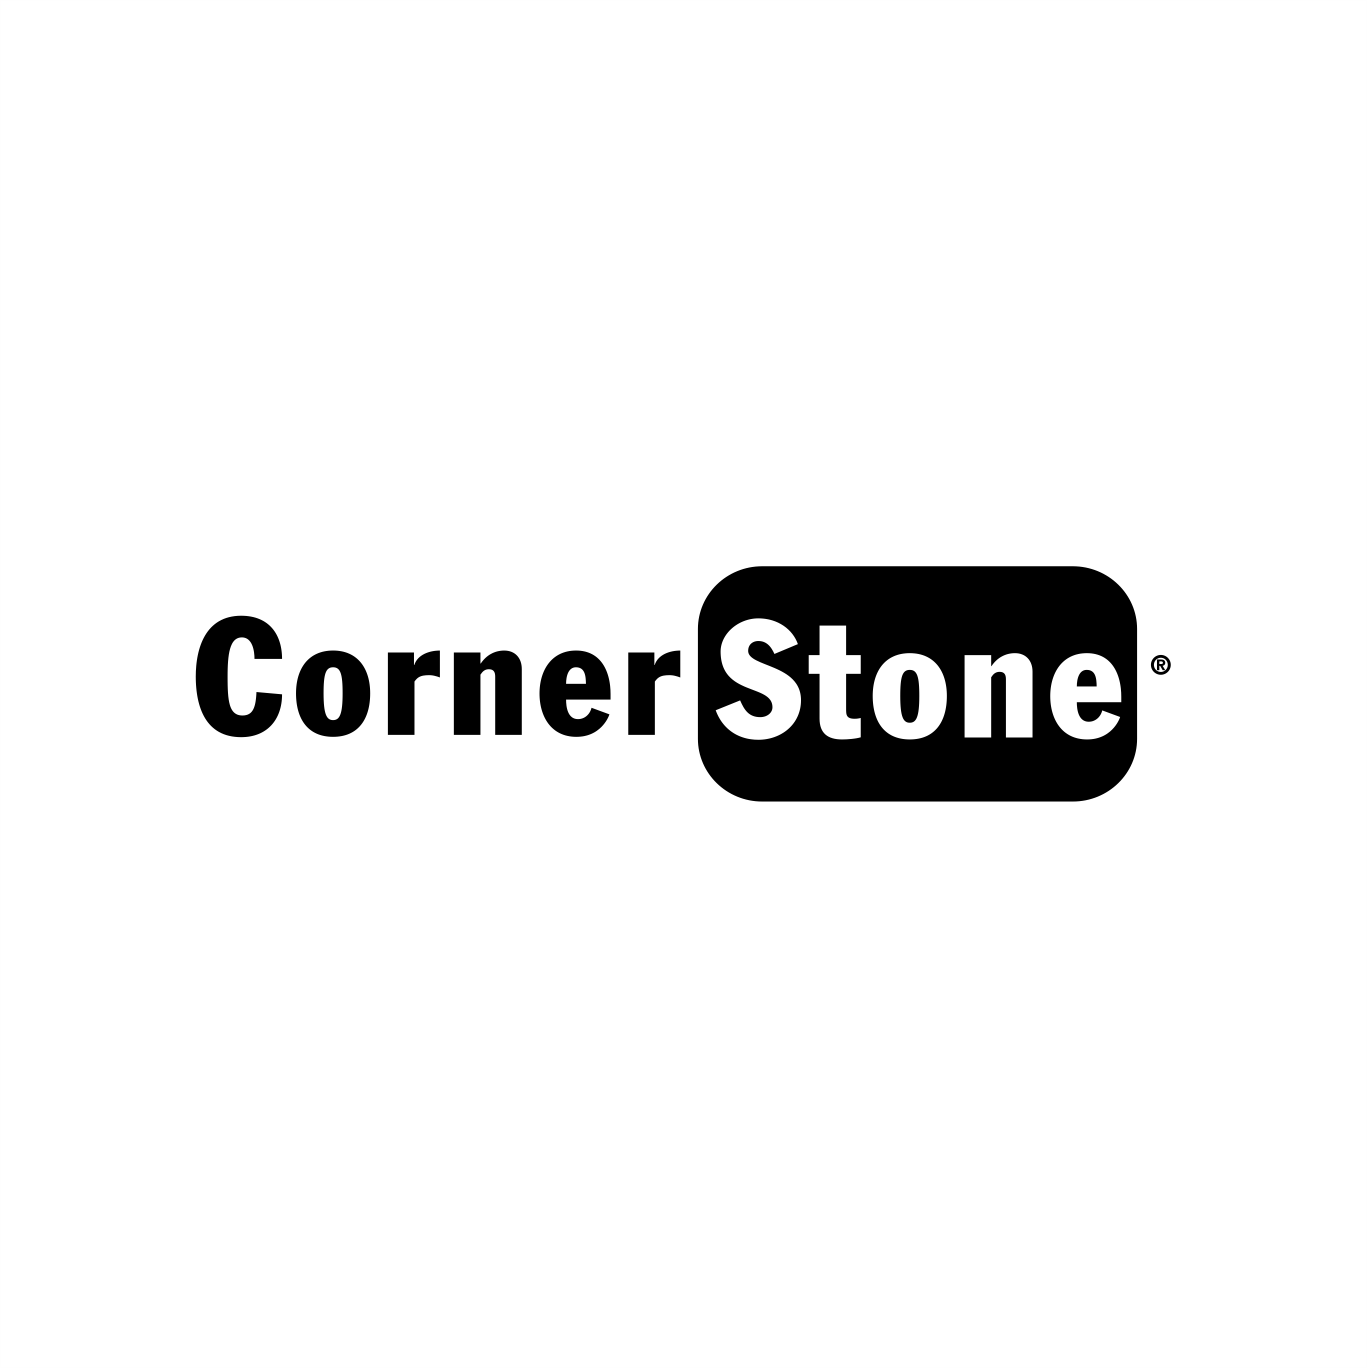 CornerStone.png